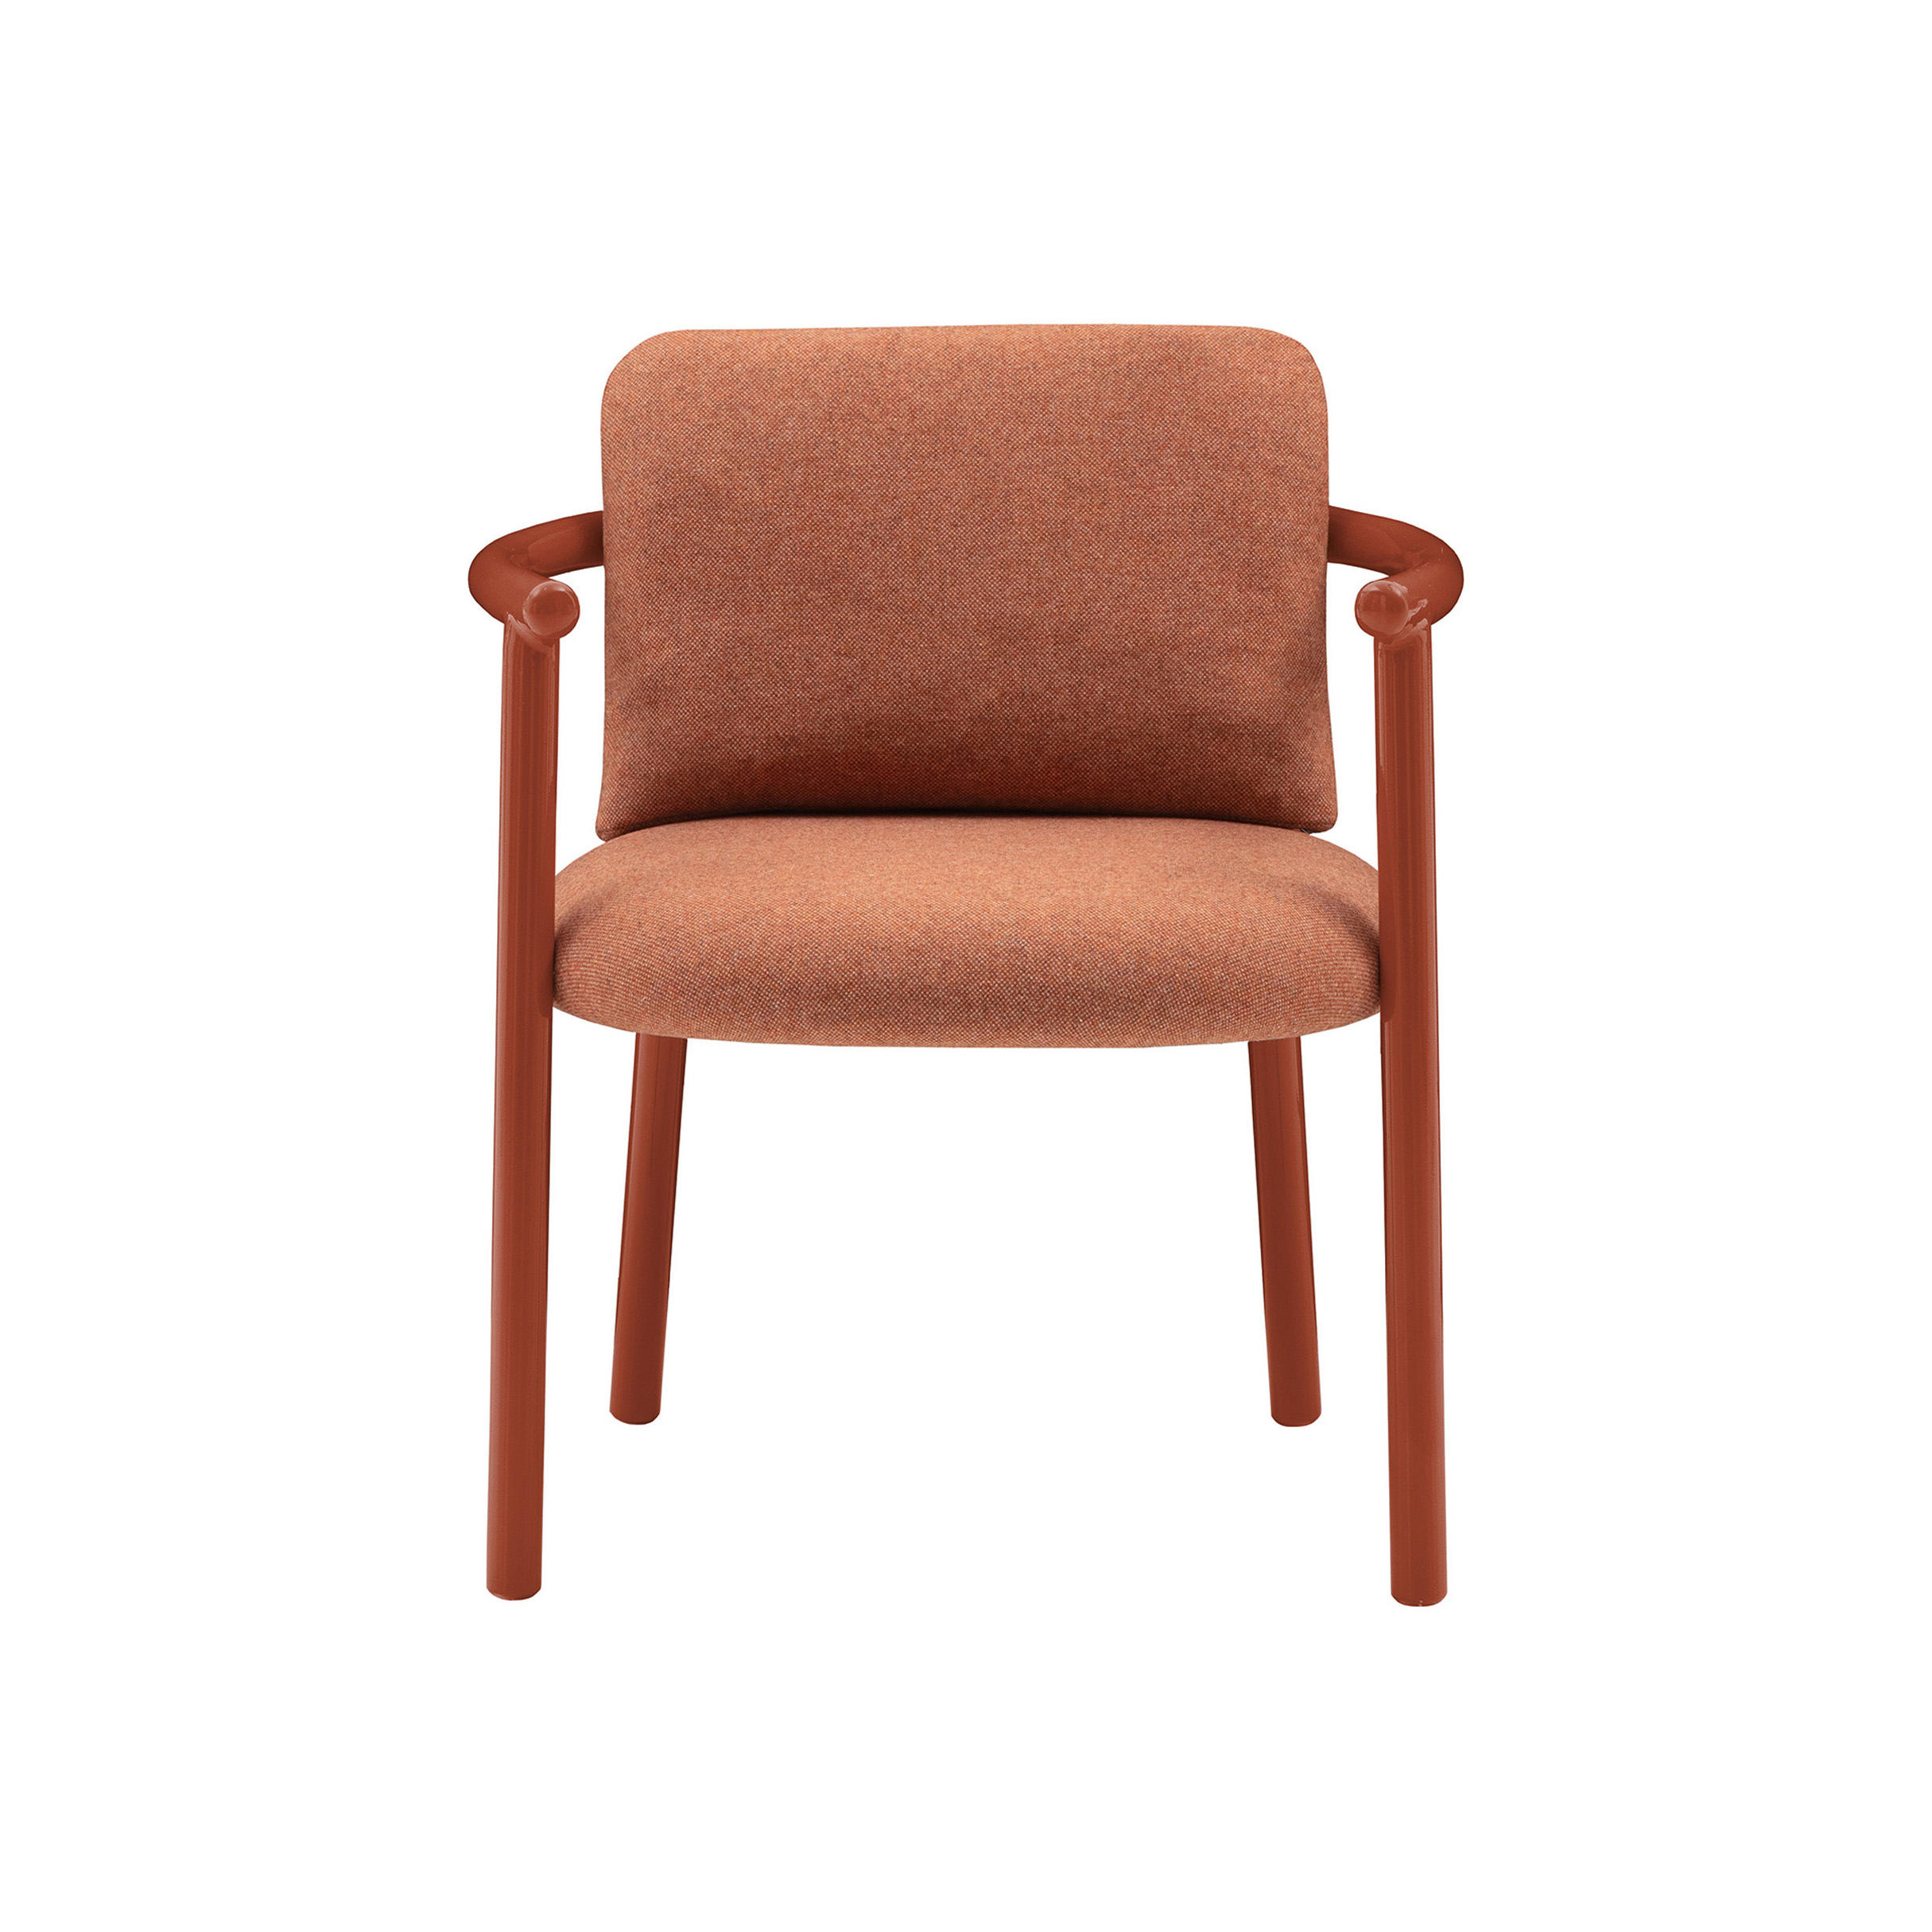 heri-o-chairs-from-b-b-italia-architonic